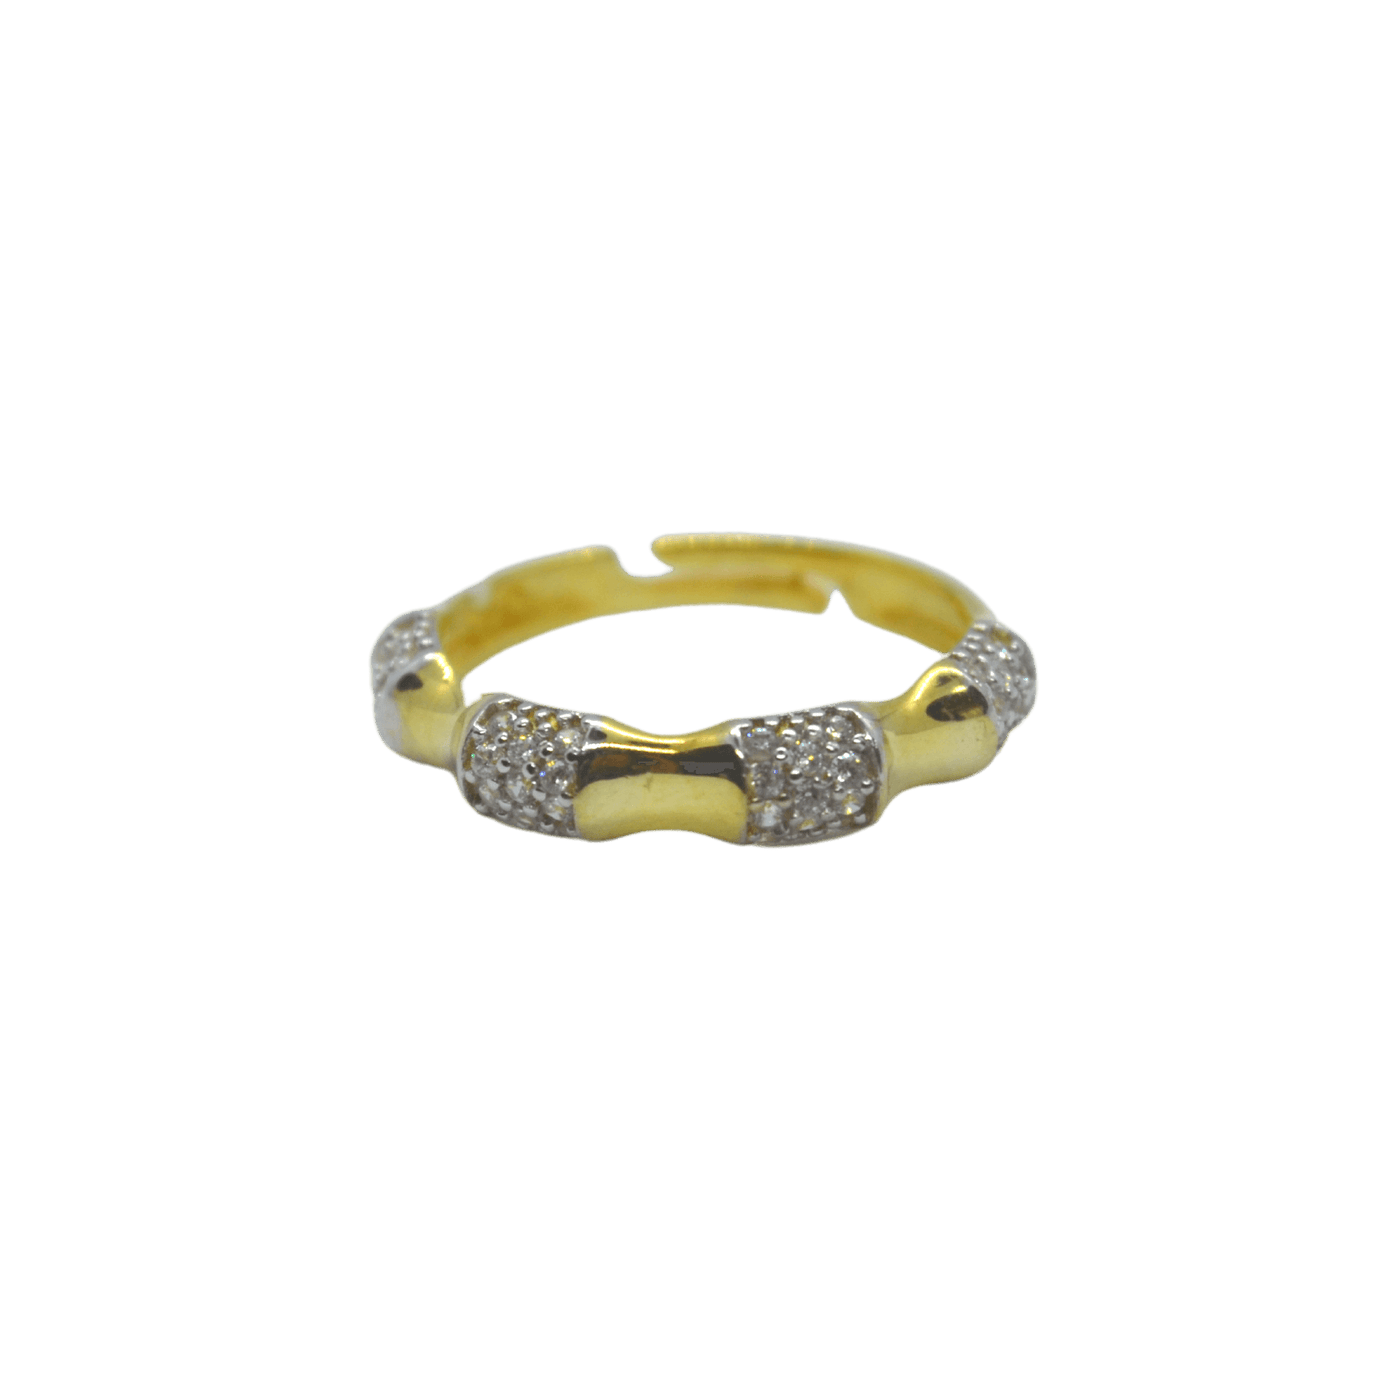 Bone Sterling Silver Adjustable Ring